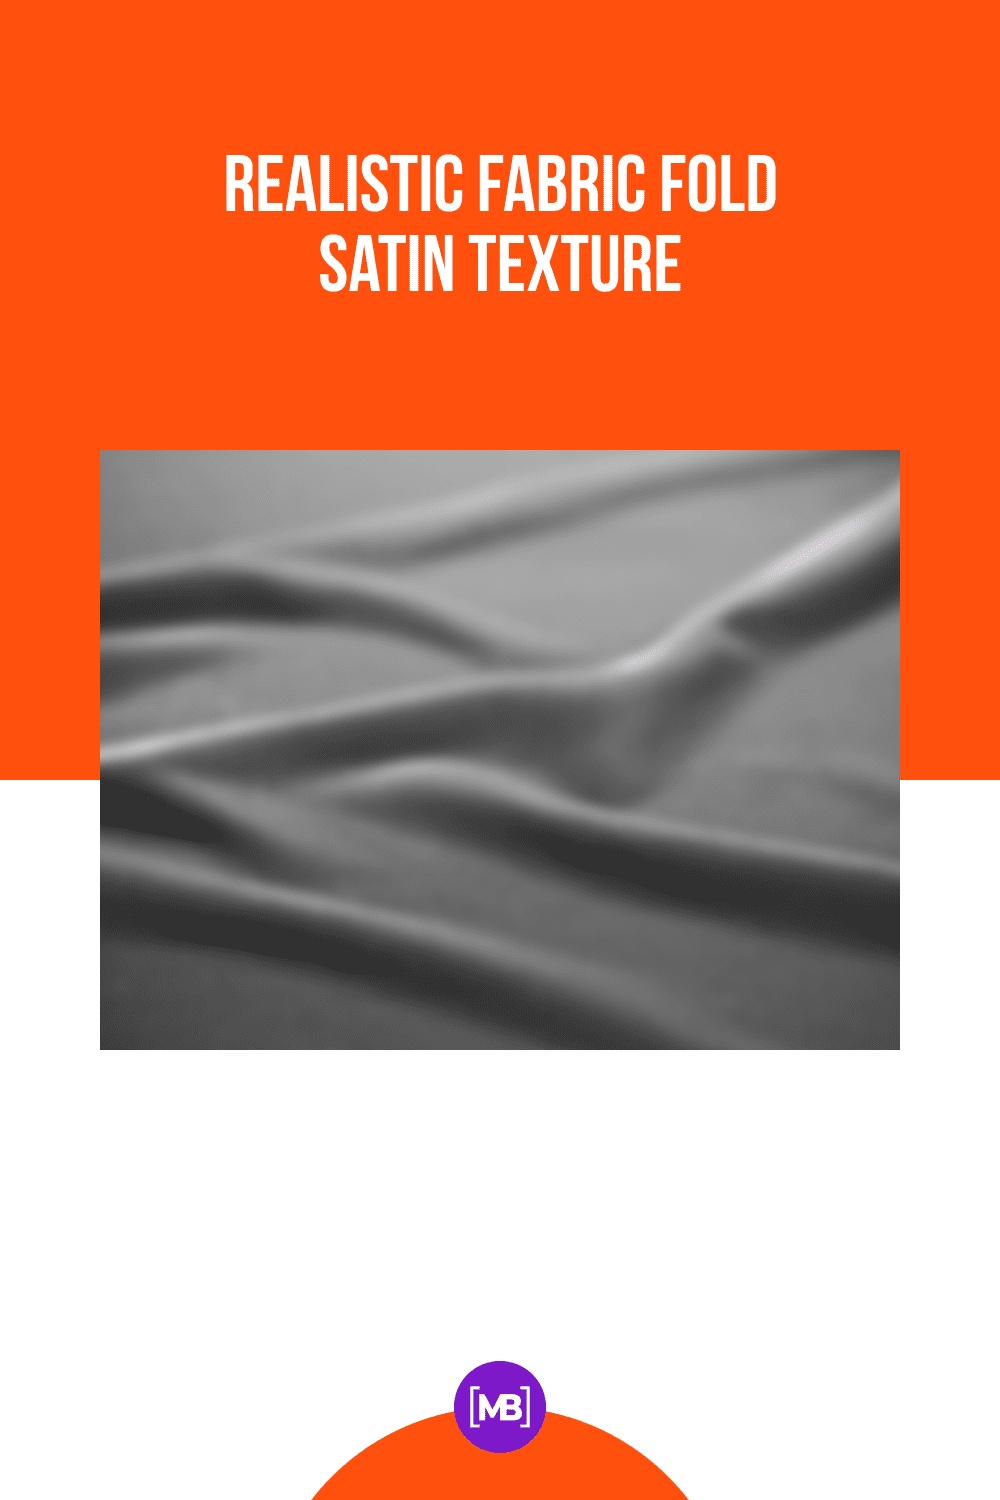  Realistic Fabric Fold Satin Texture.